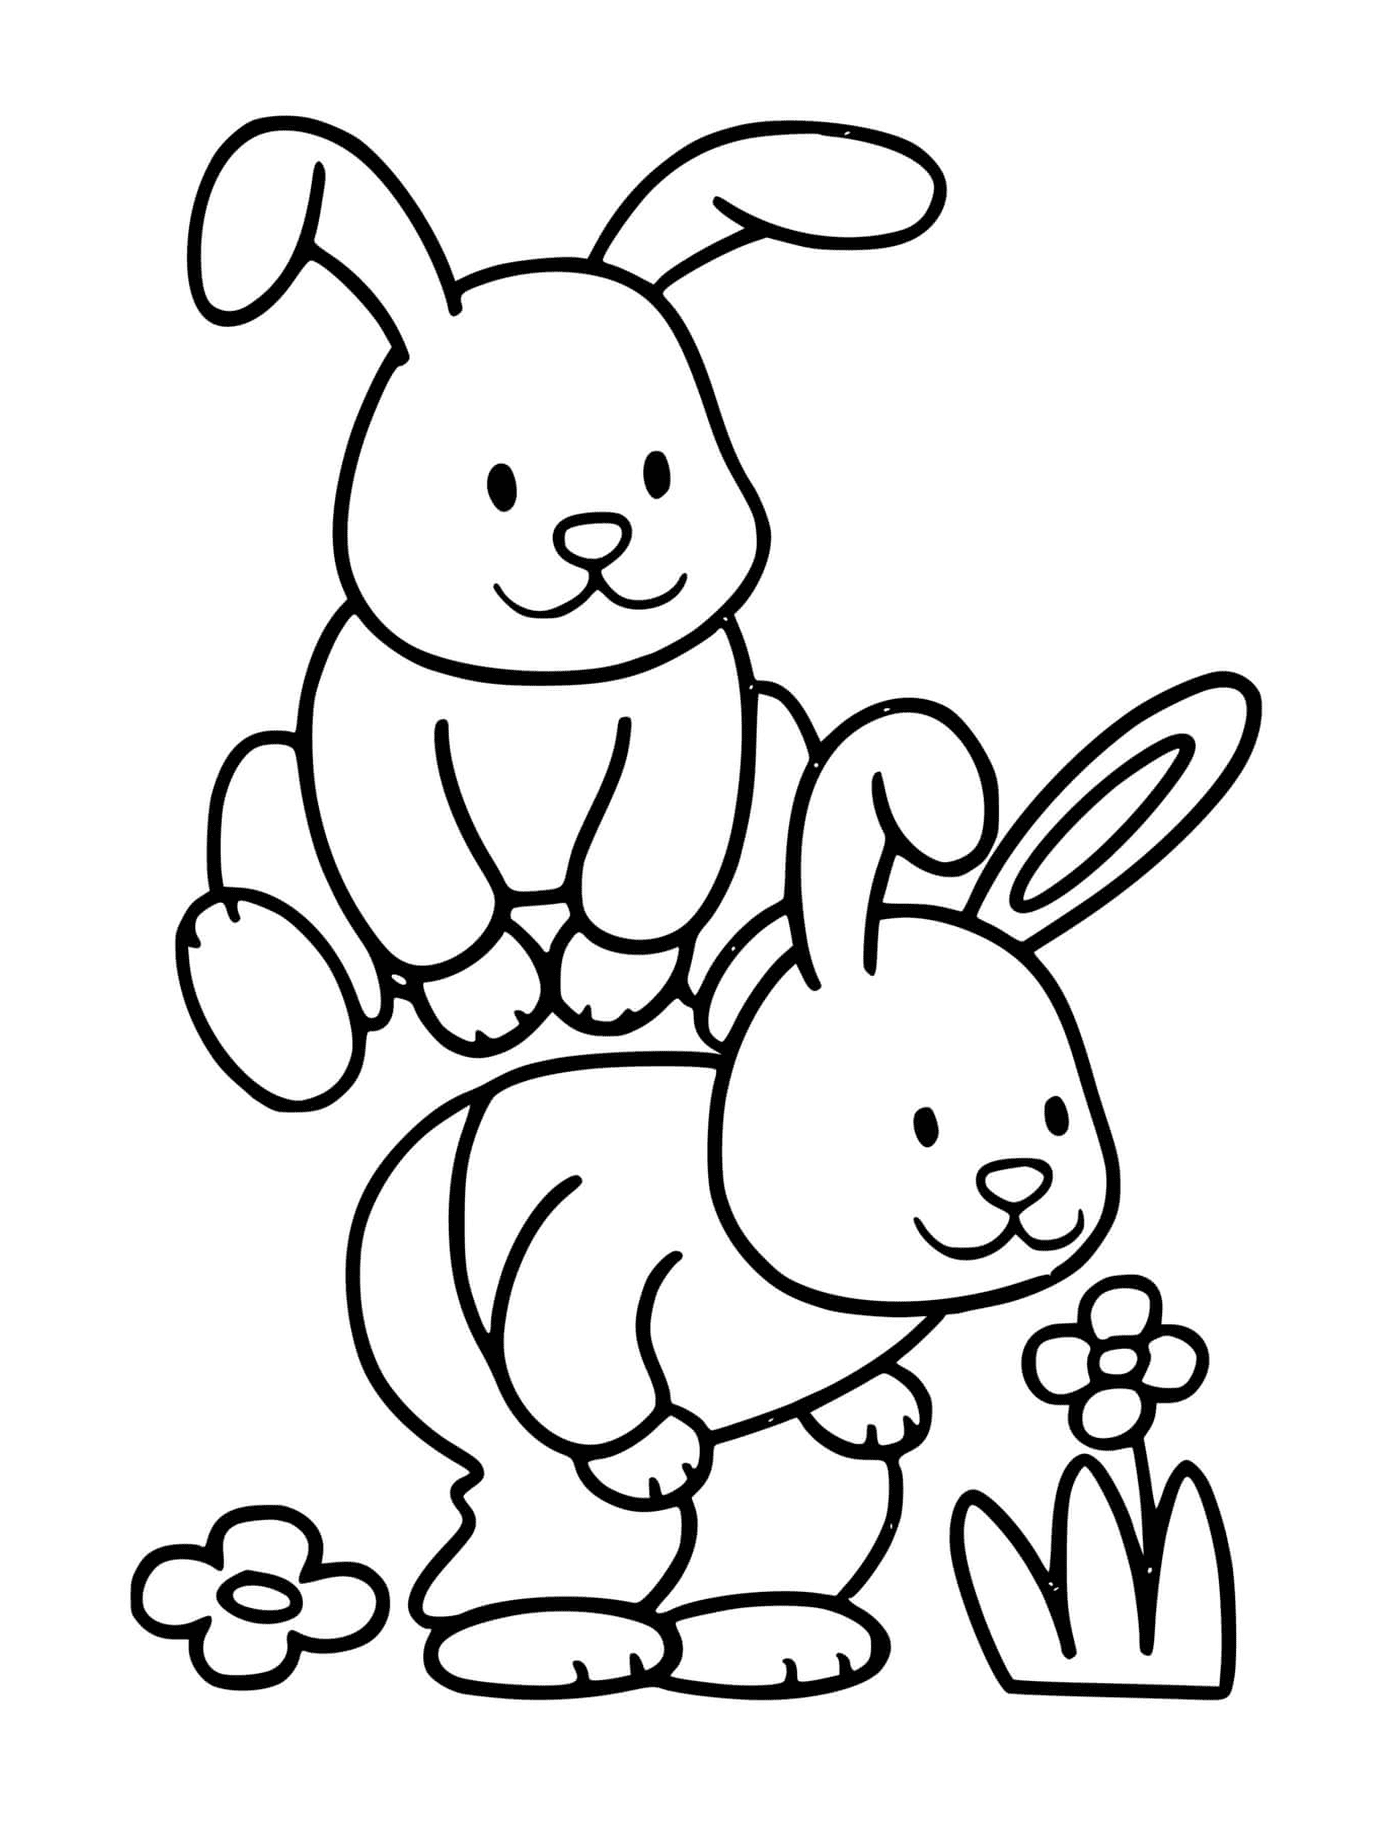  Conejos maternos Pascuas fáciles 